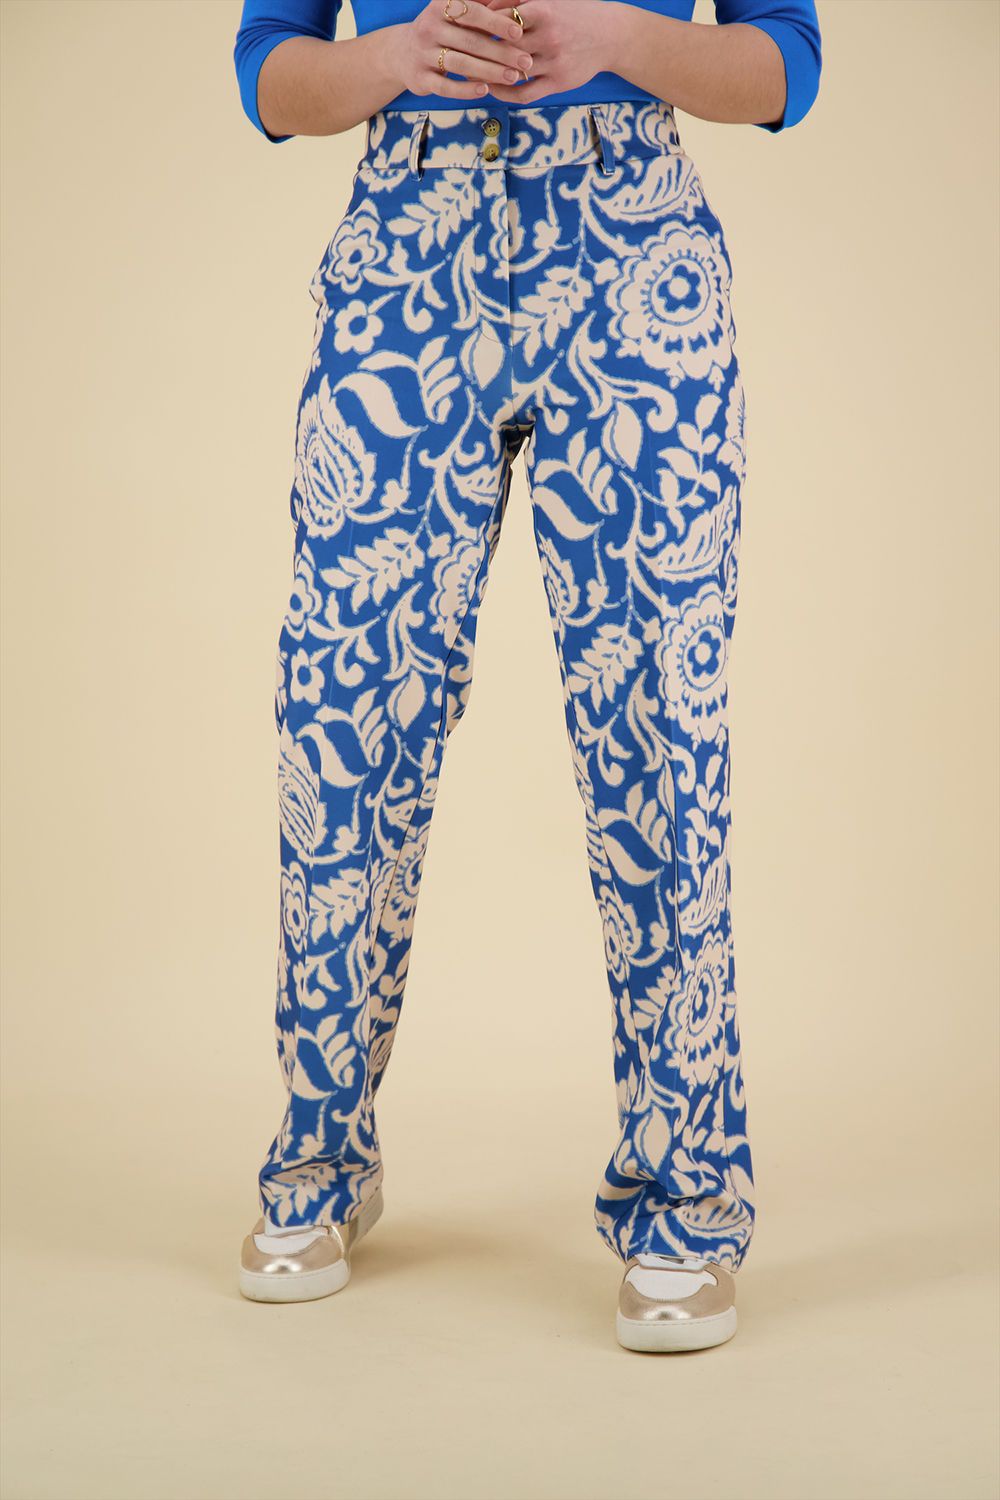 Geisha Pantalon Printed Blauw